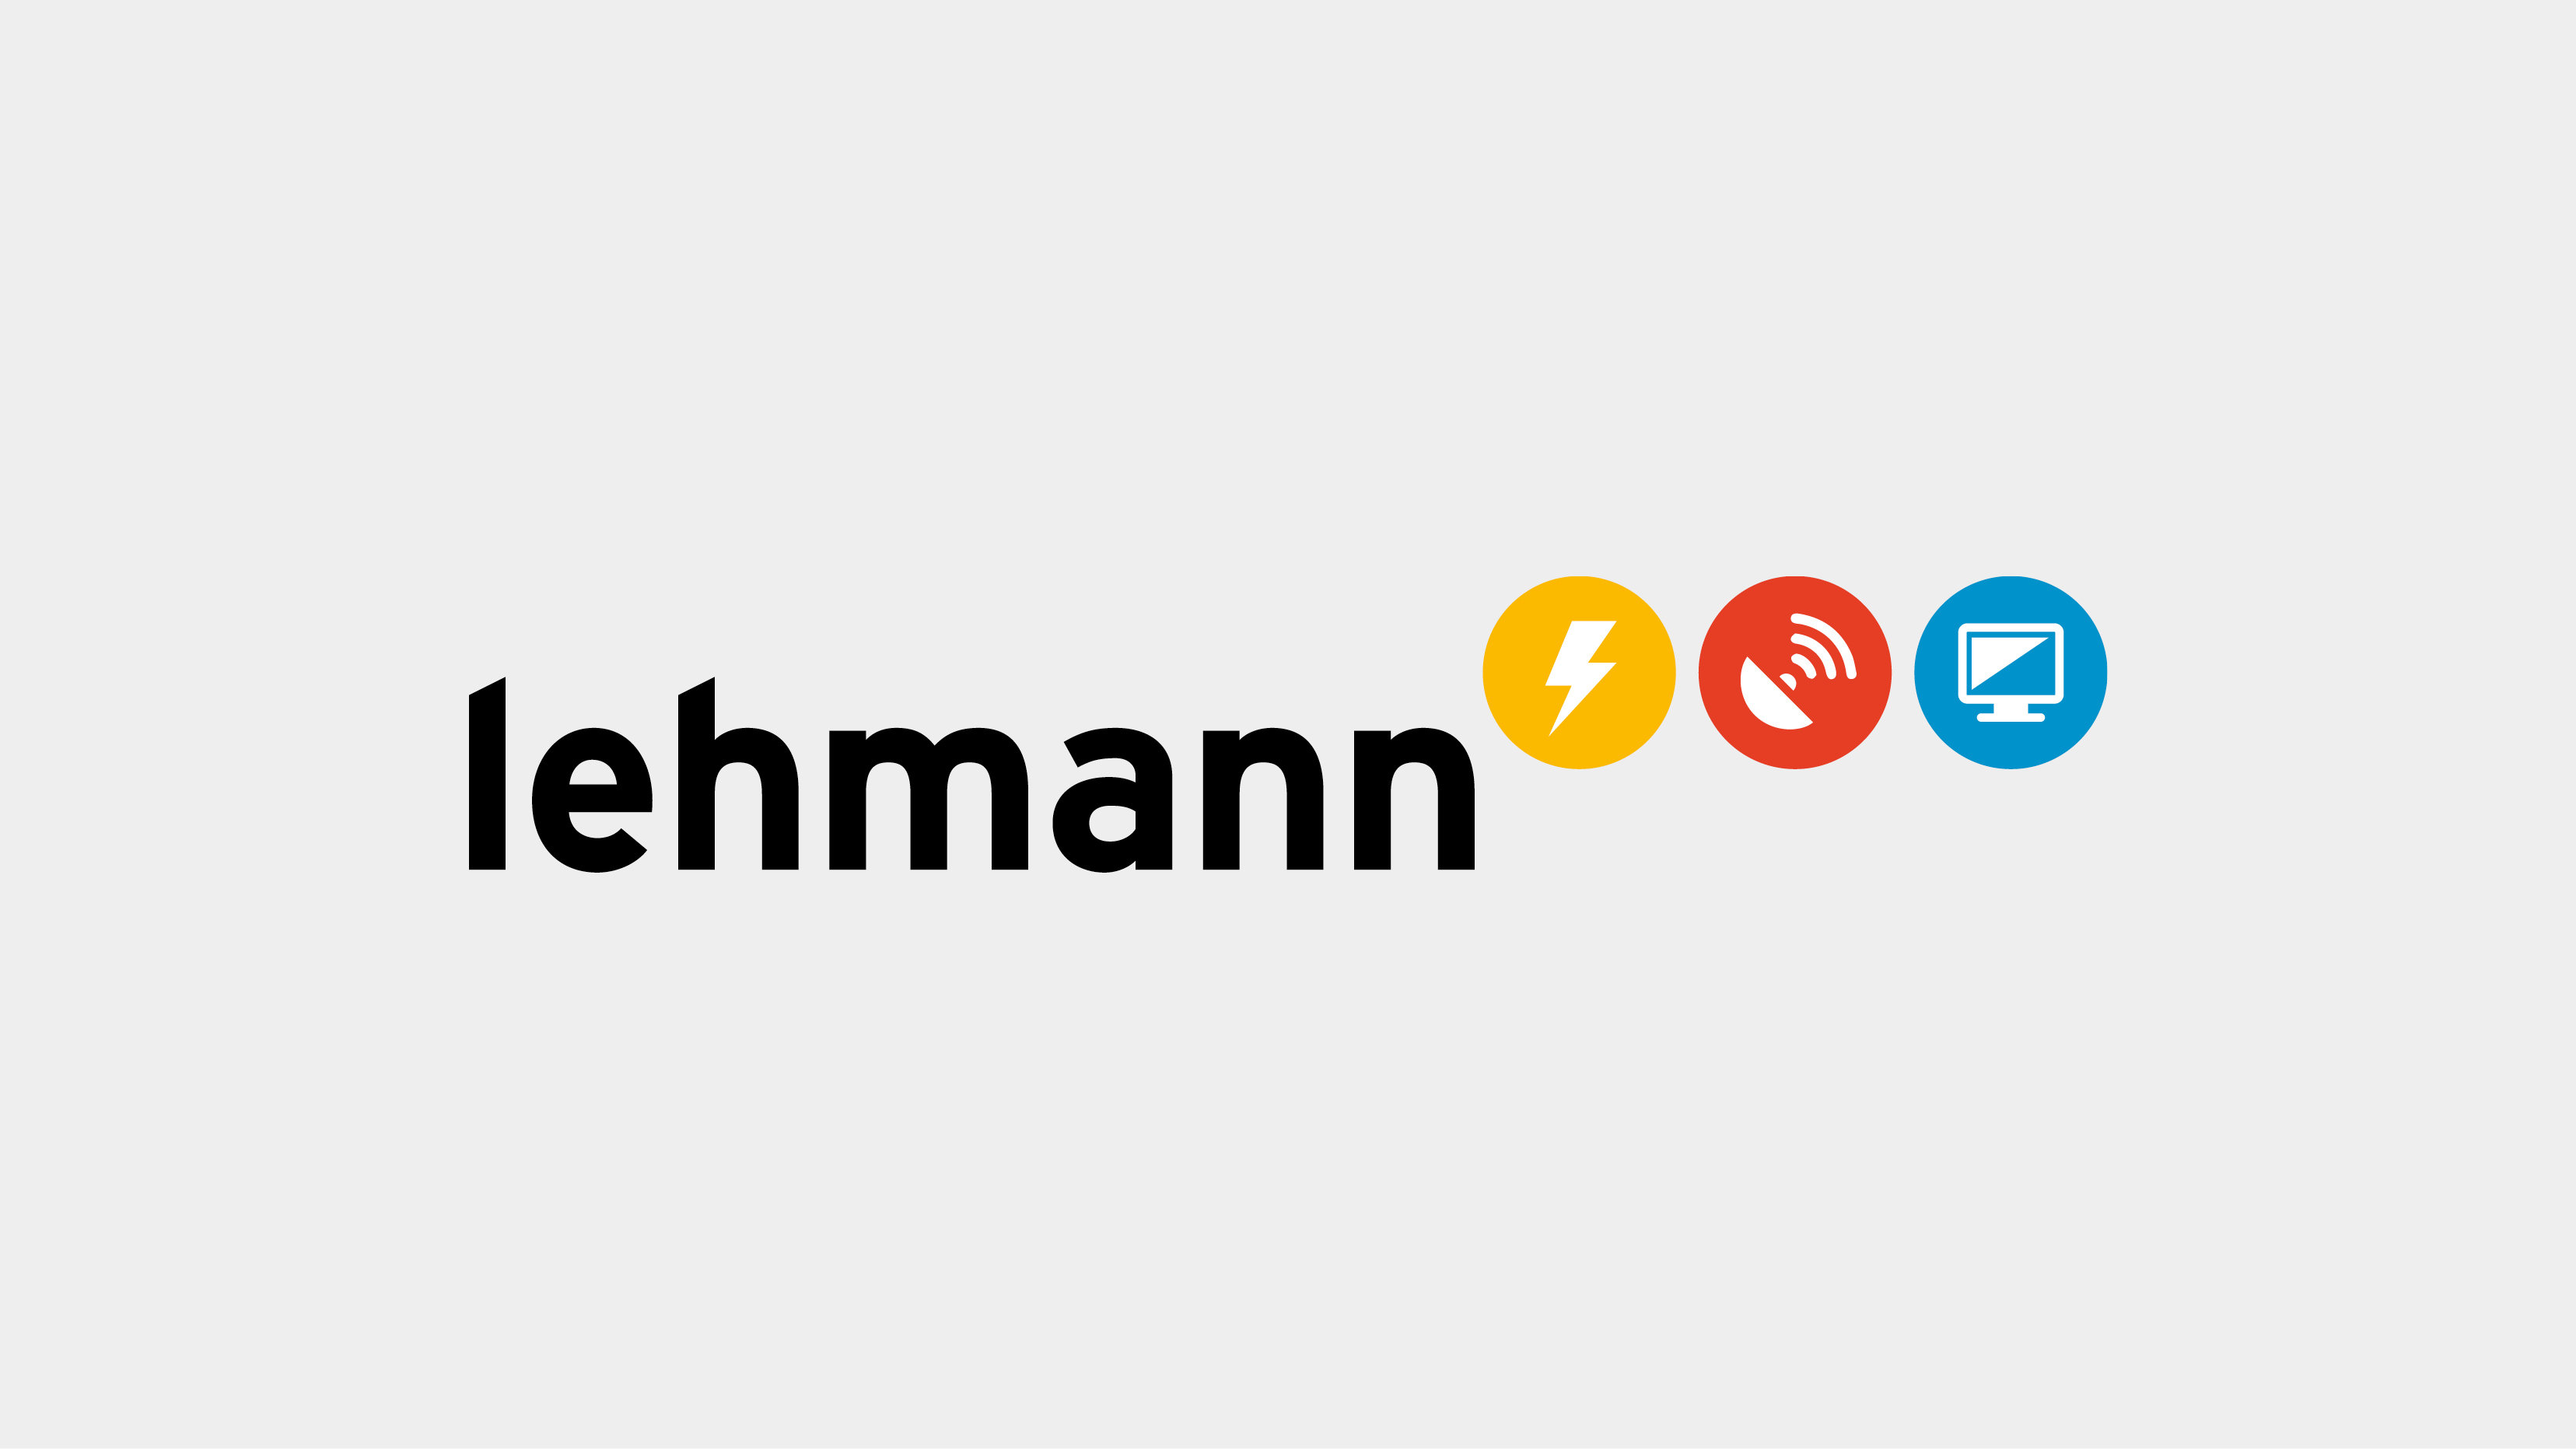 A. Lehmann Elektro AG